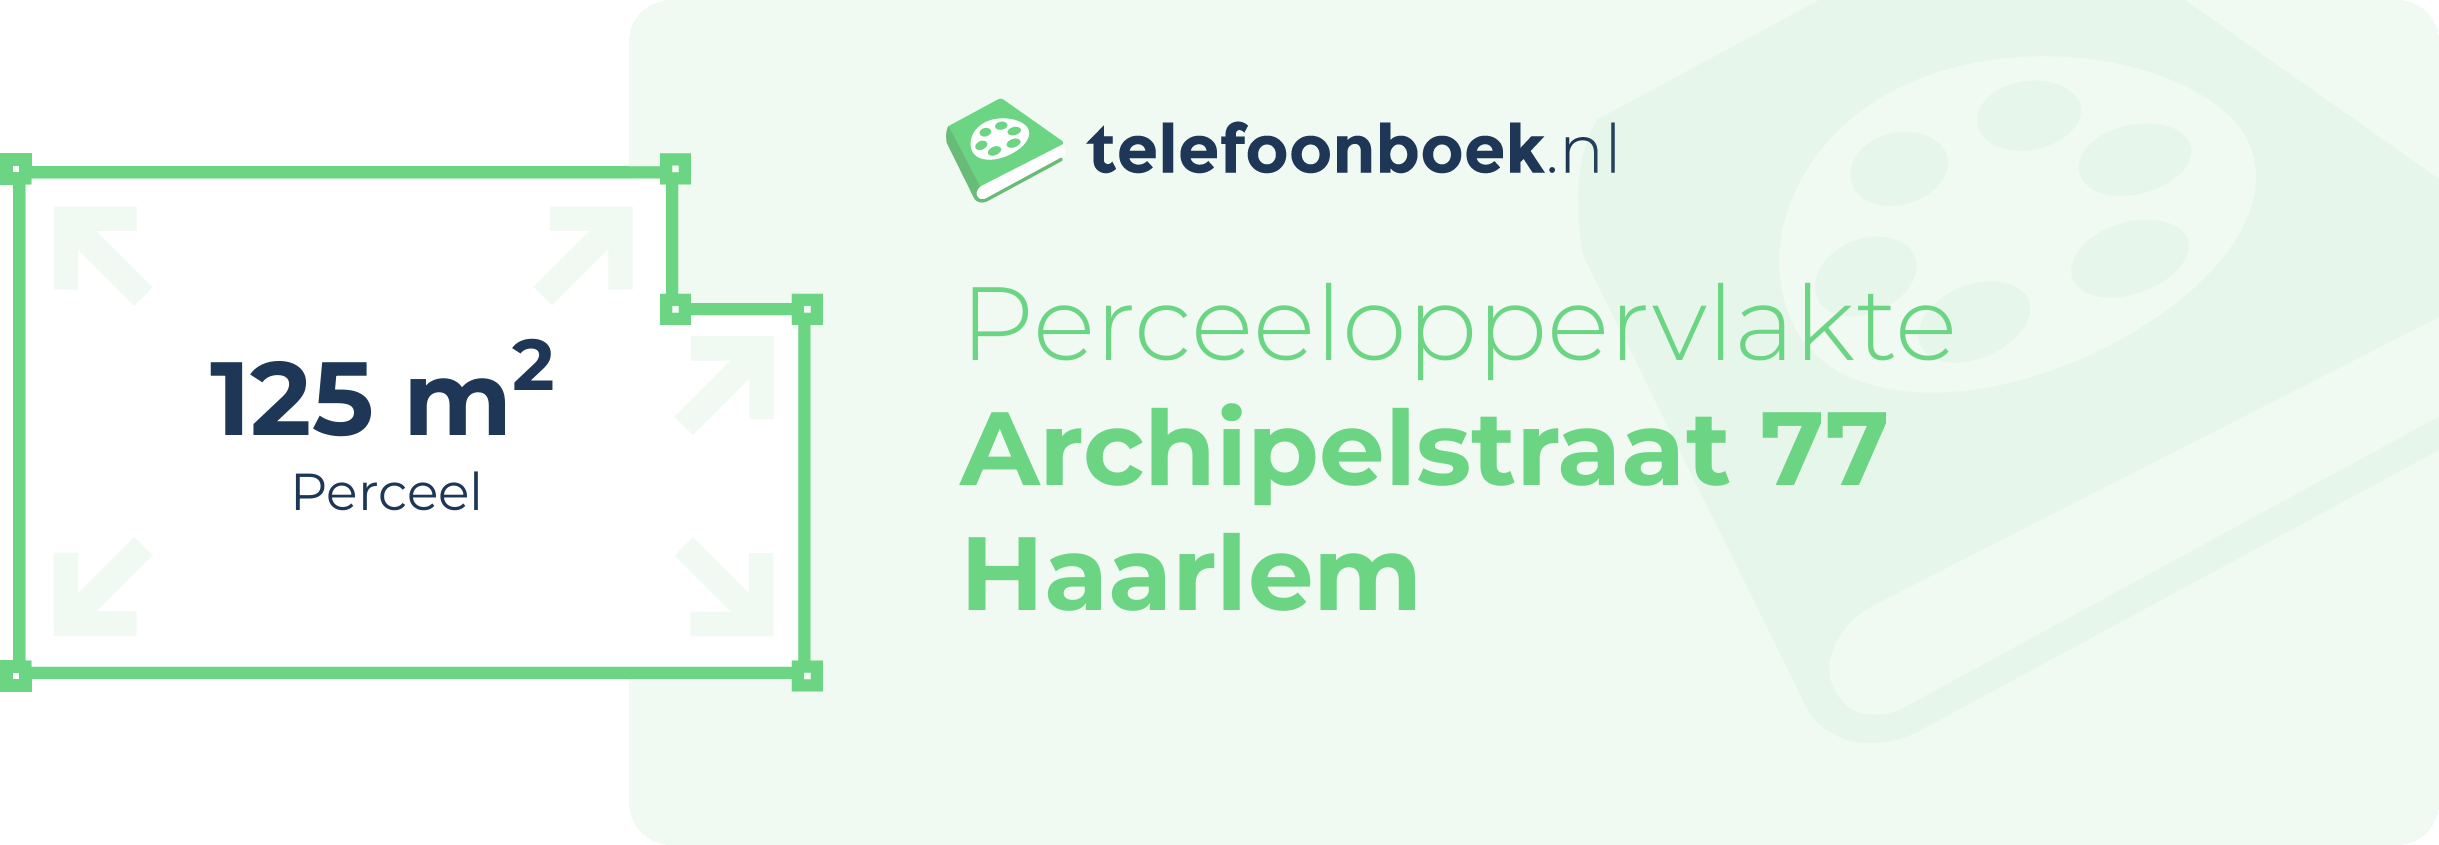 Perceeloppervlakte Archipelstraat 77 Haarlem